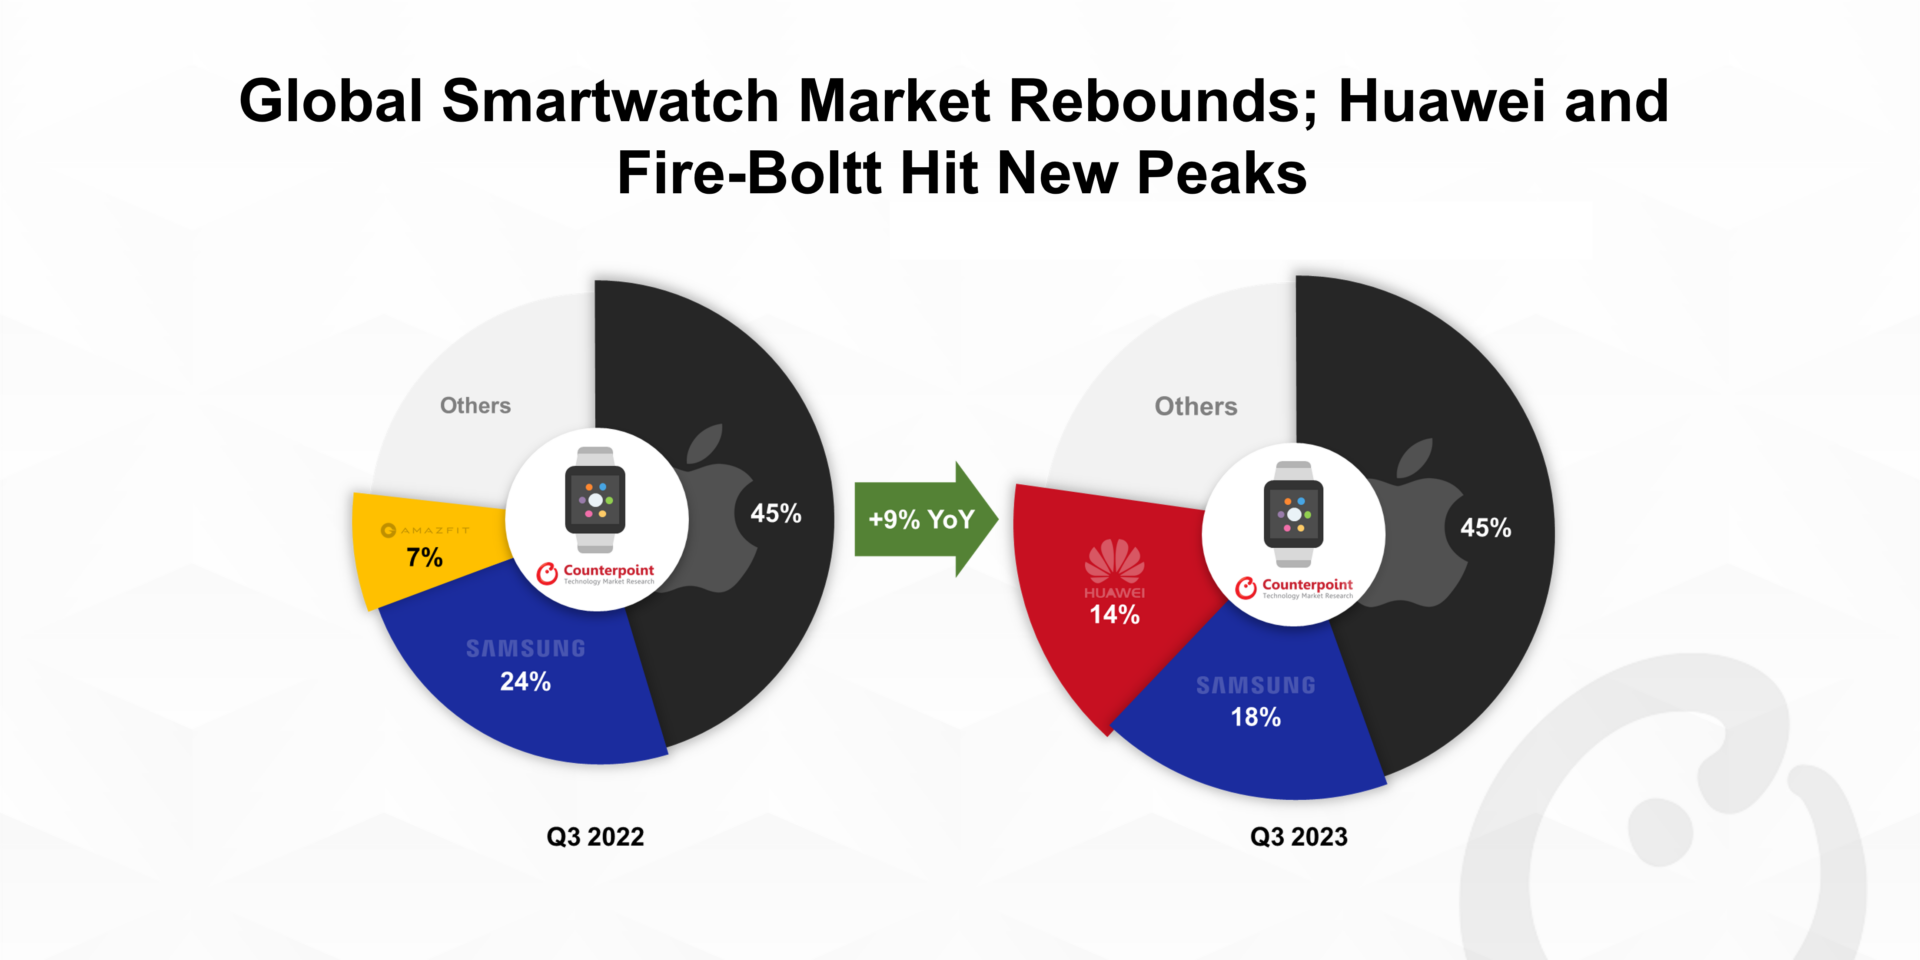 Global Smartwatch Market Rebounds; Huawei and Fire-Boltt Hit New Peaks